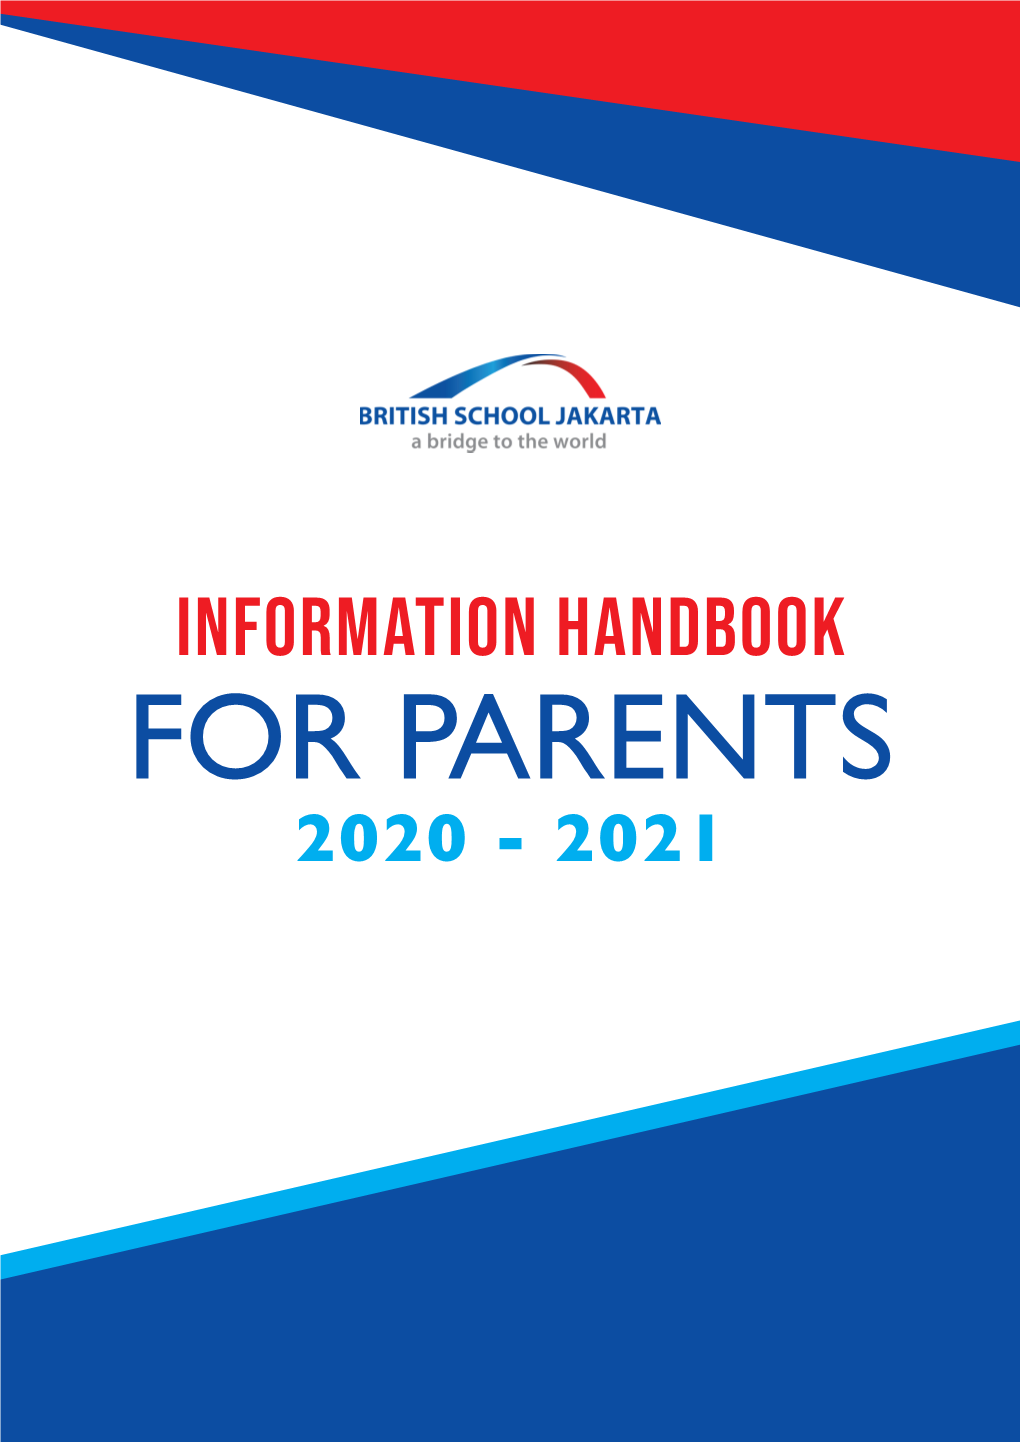 Information Handbook for PARENTS 2020 - 2021